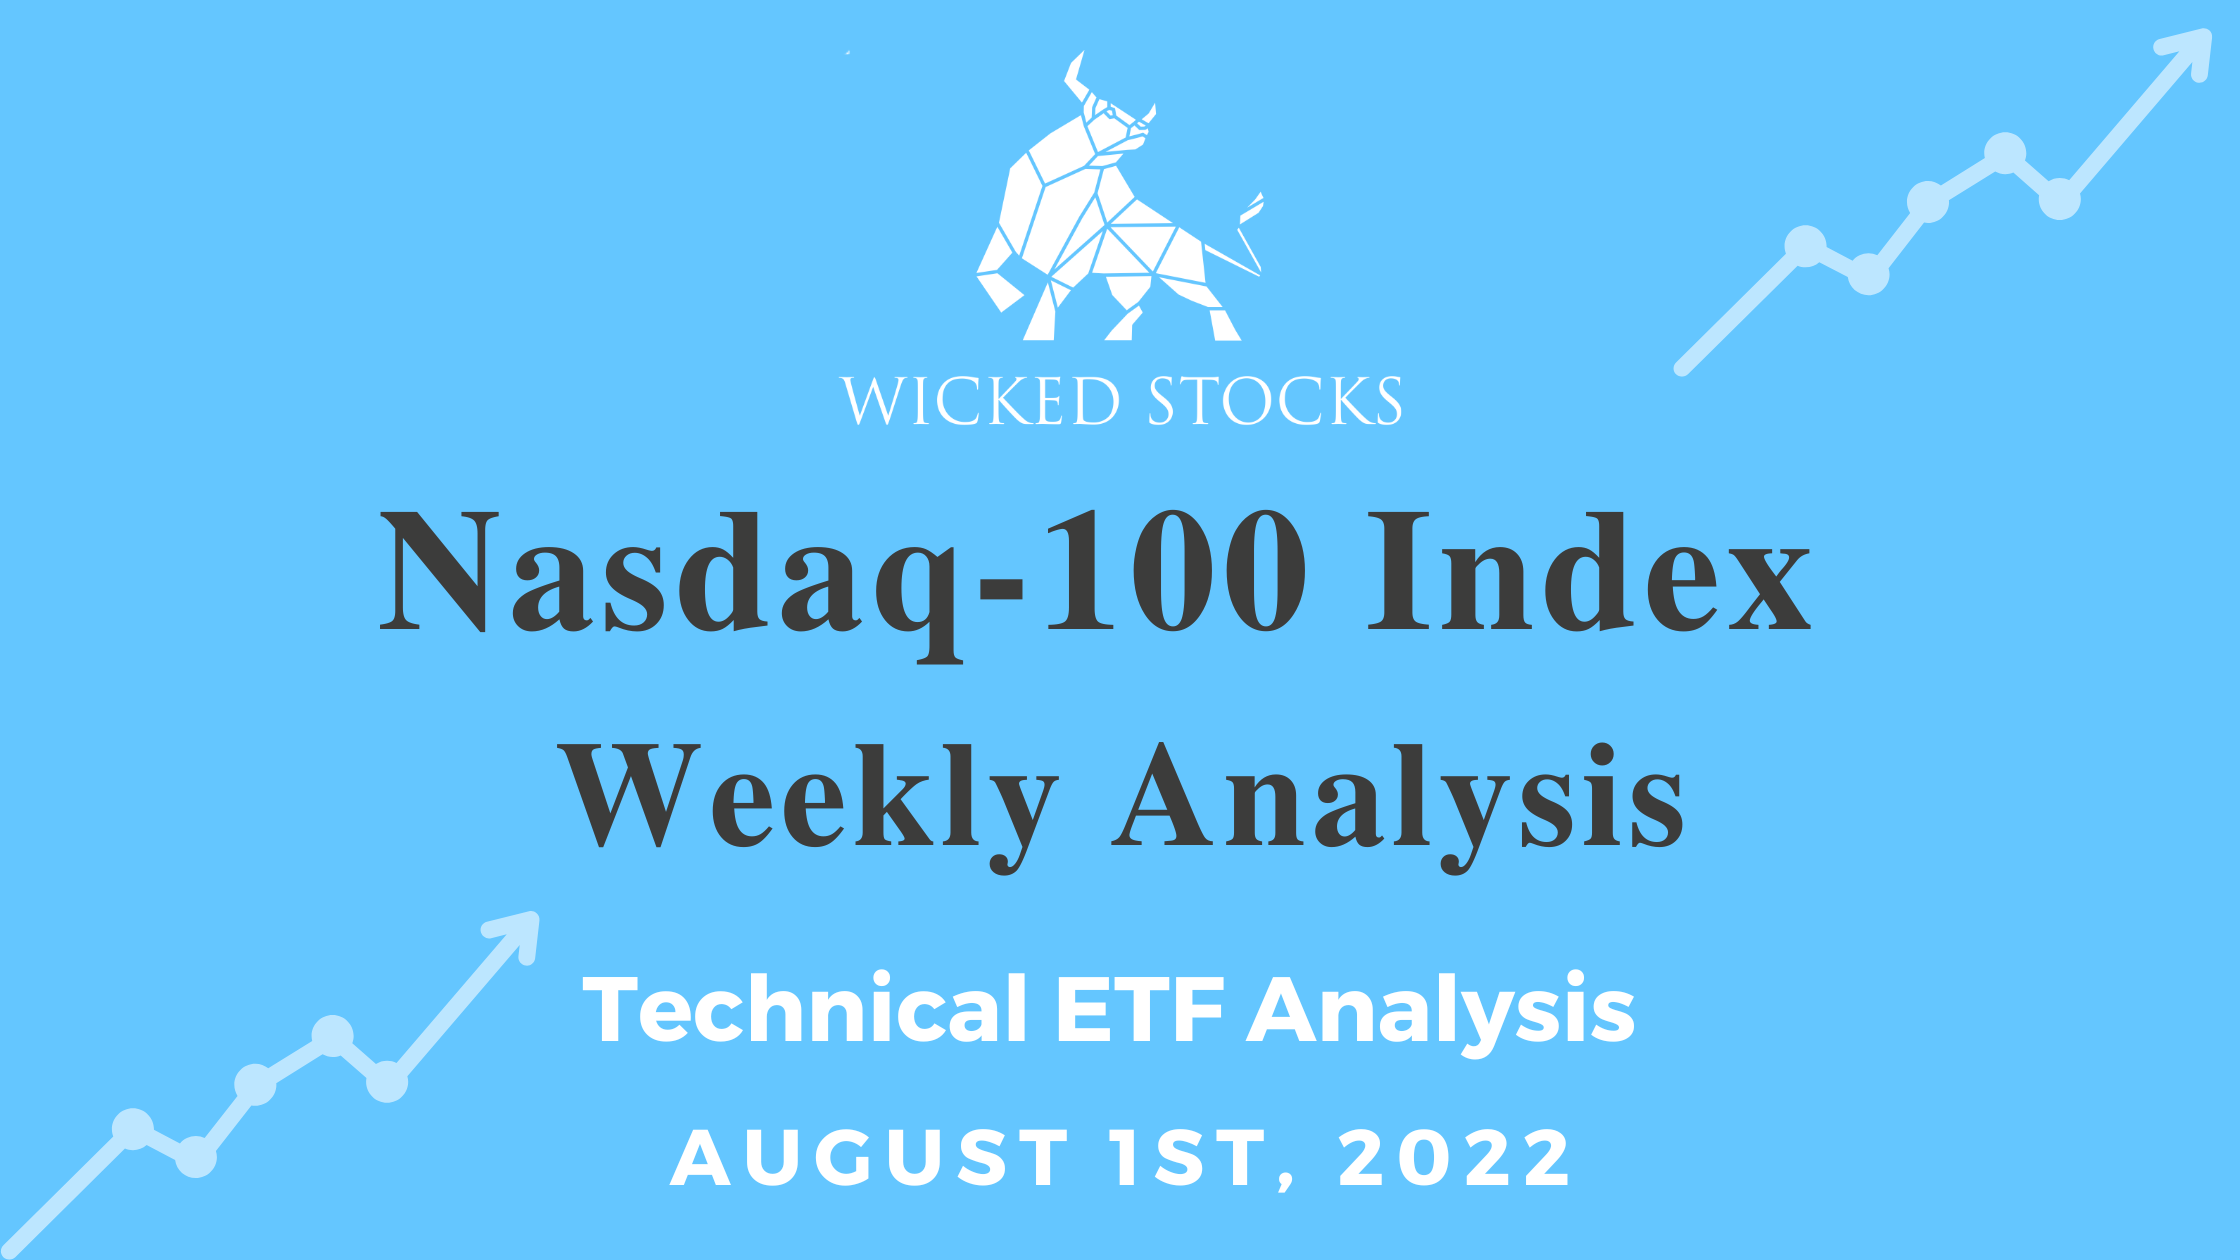 NASDAQ-100 Index Weekly Analysis 8/1/2022